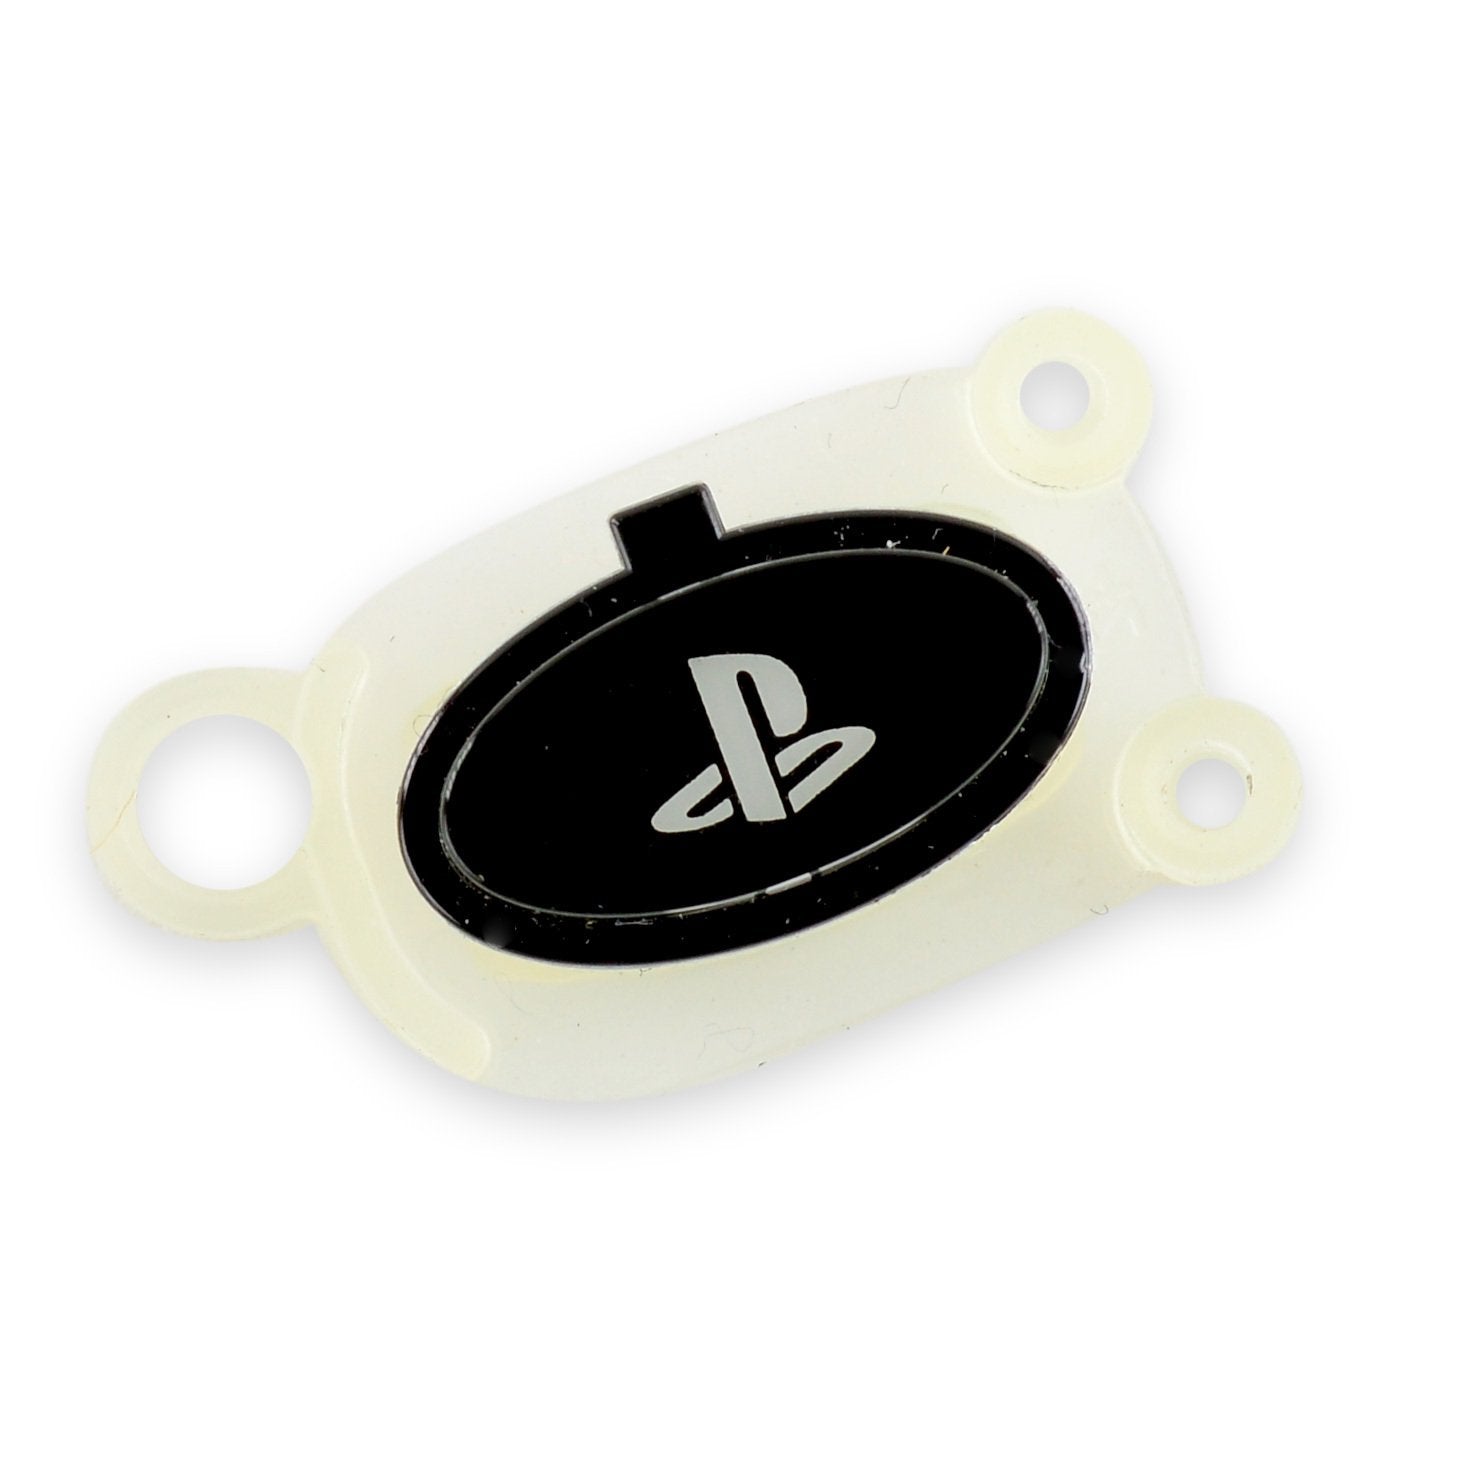 PlayStation Vita (PCH-1000) Home Button